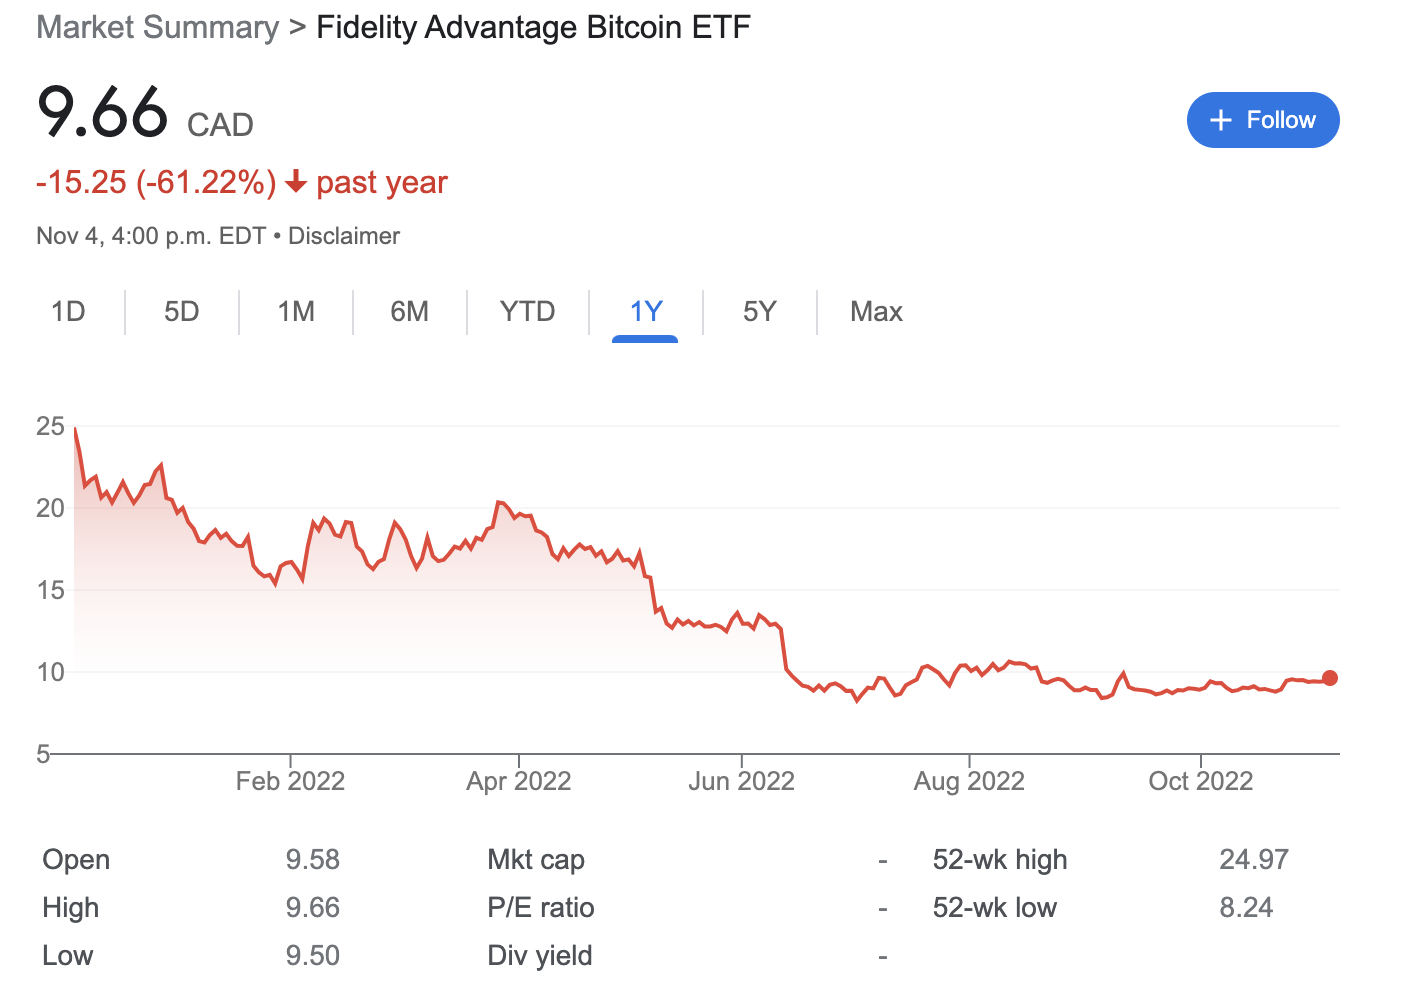 Fidelity Advantage Bitcoin ETF price chart